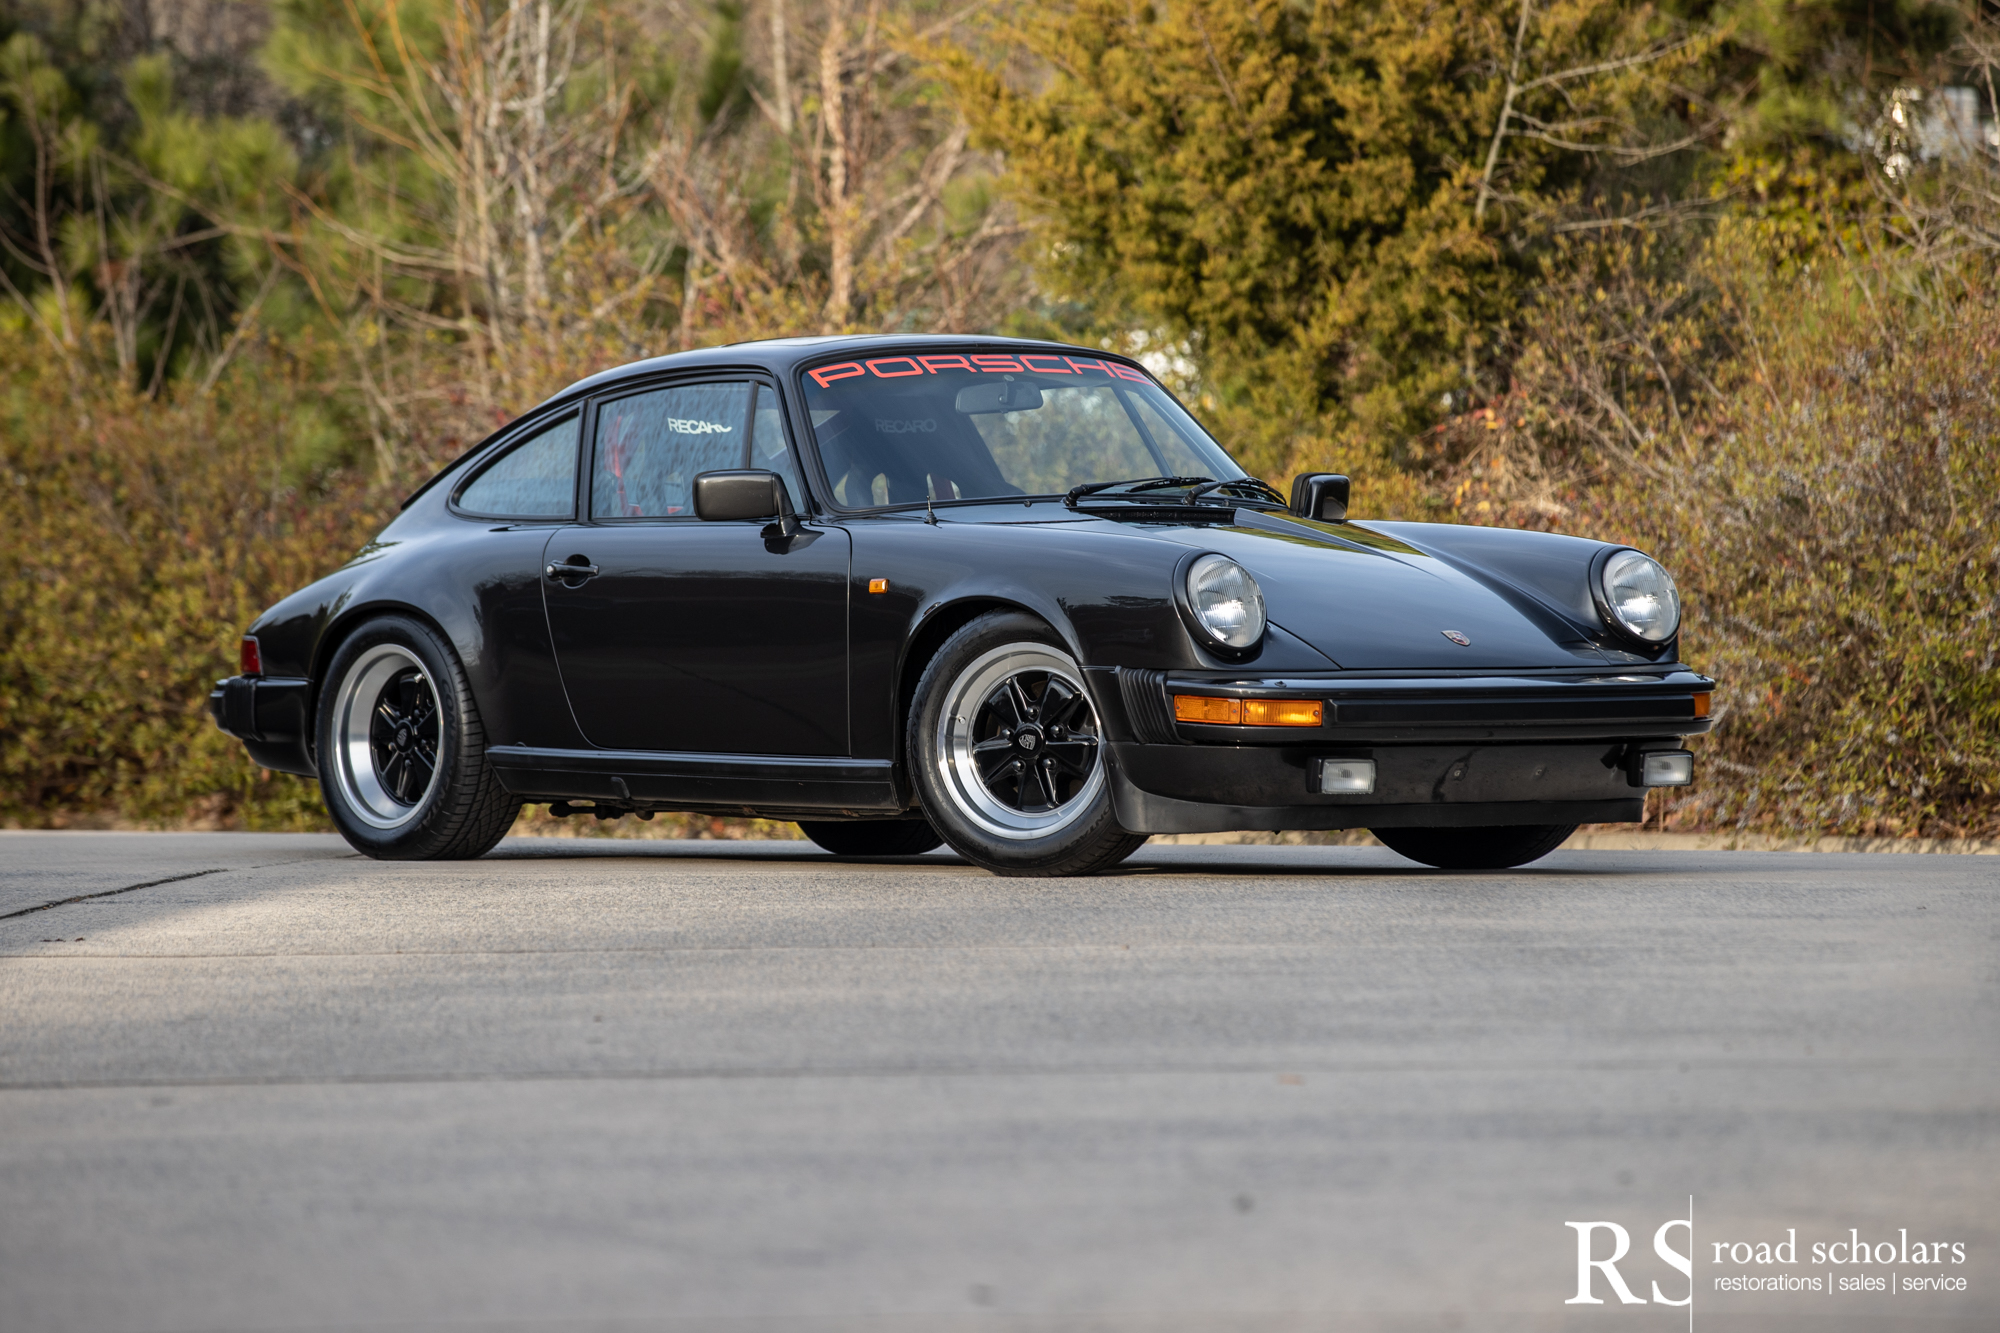 1981 Porsche 911 SC - Road Scholars - Vintage Porsche Sales and Restoration